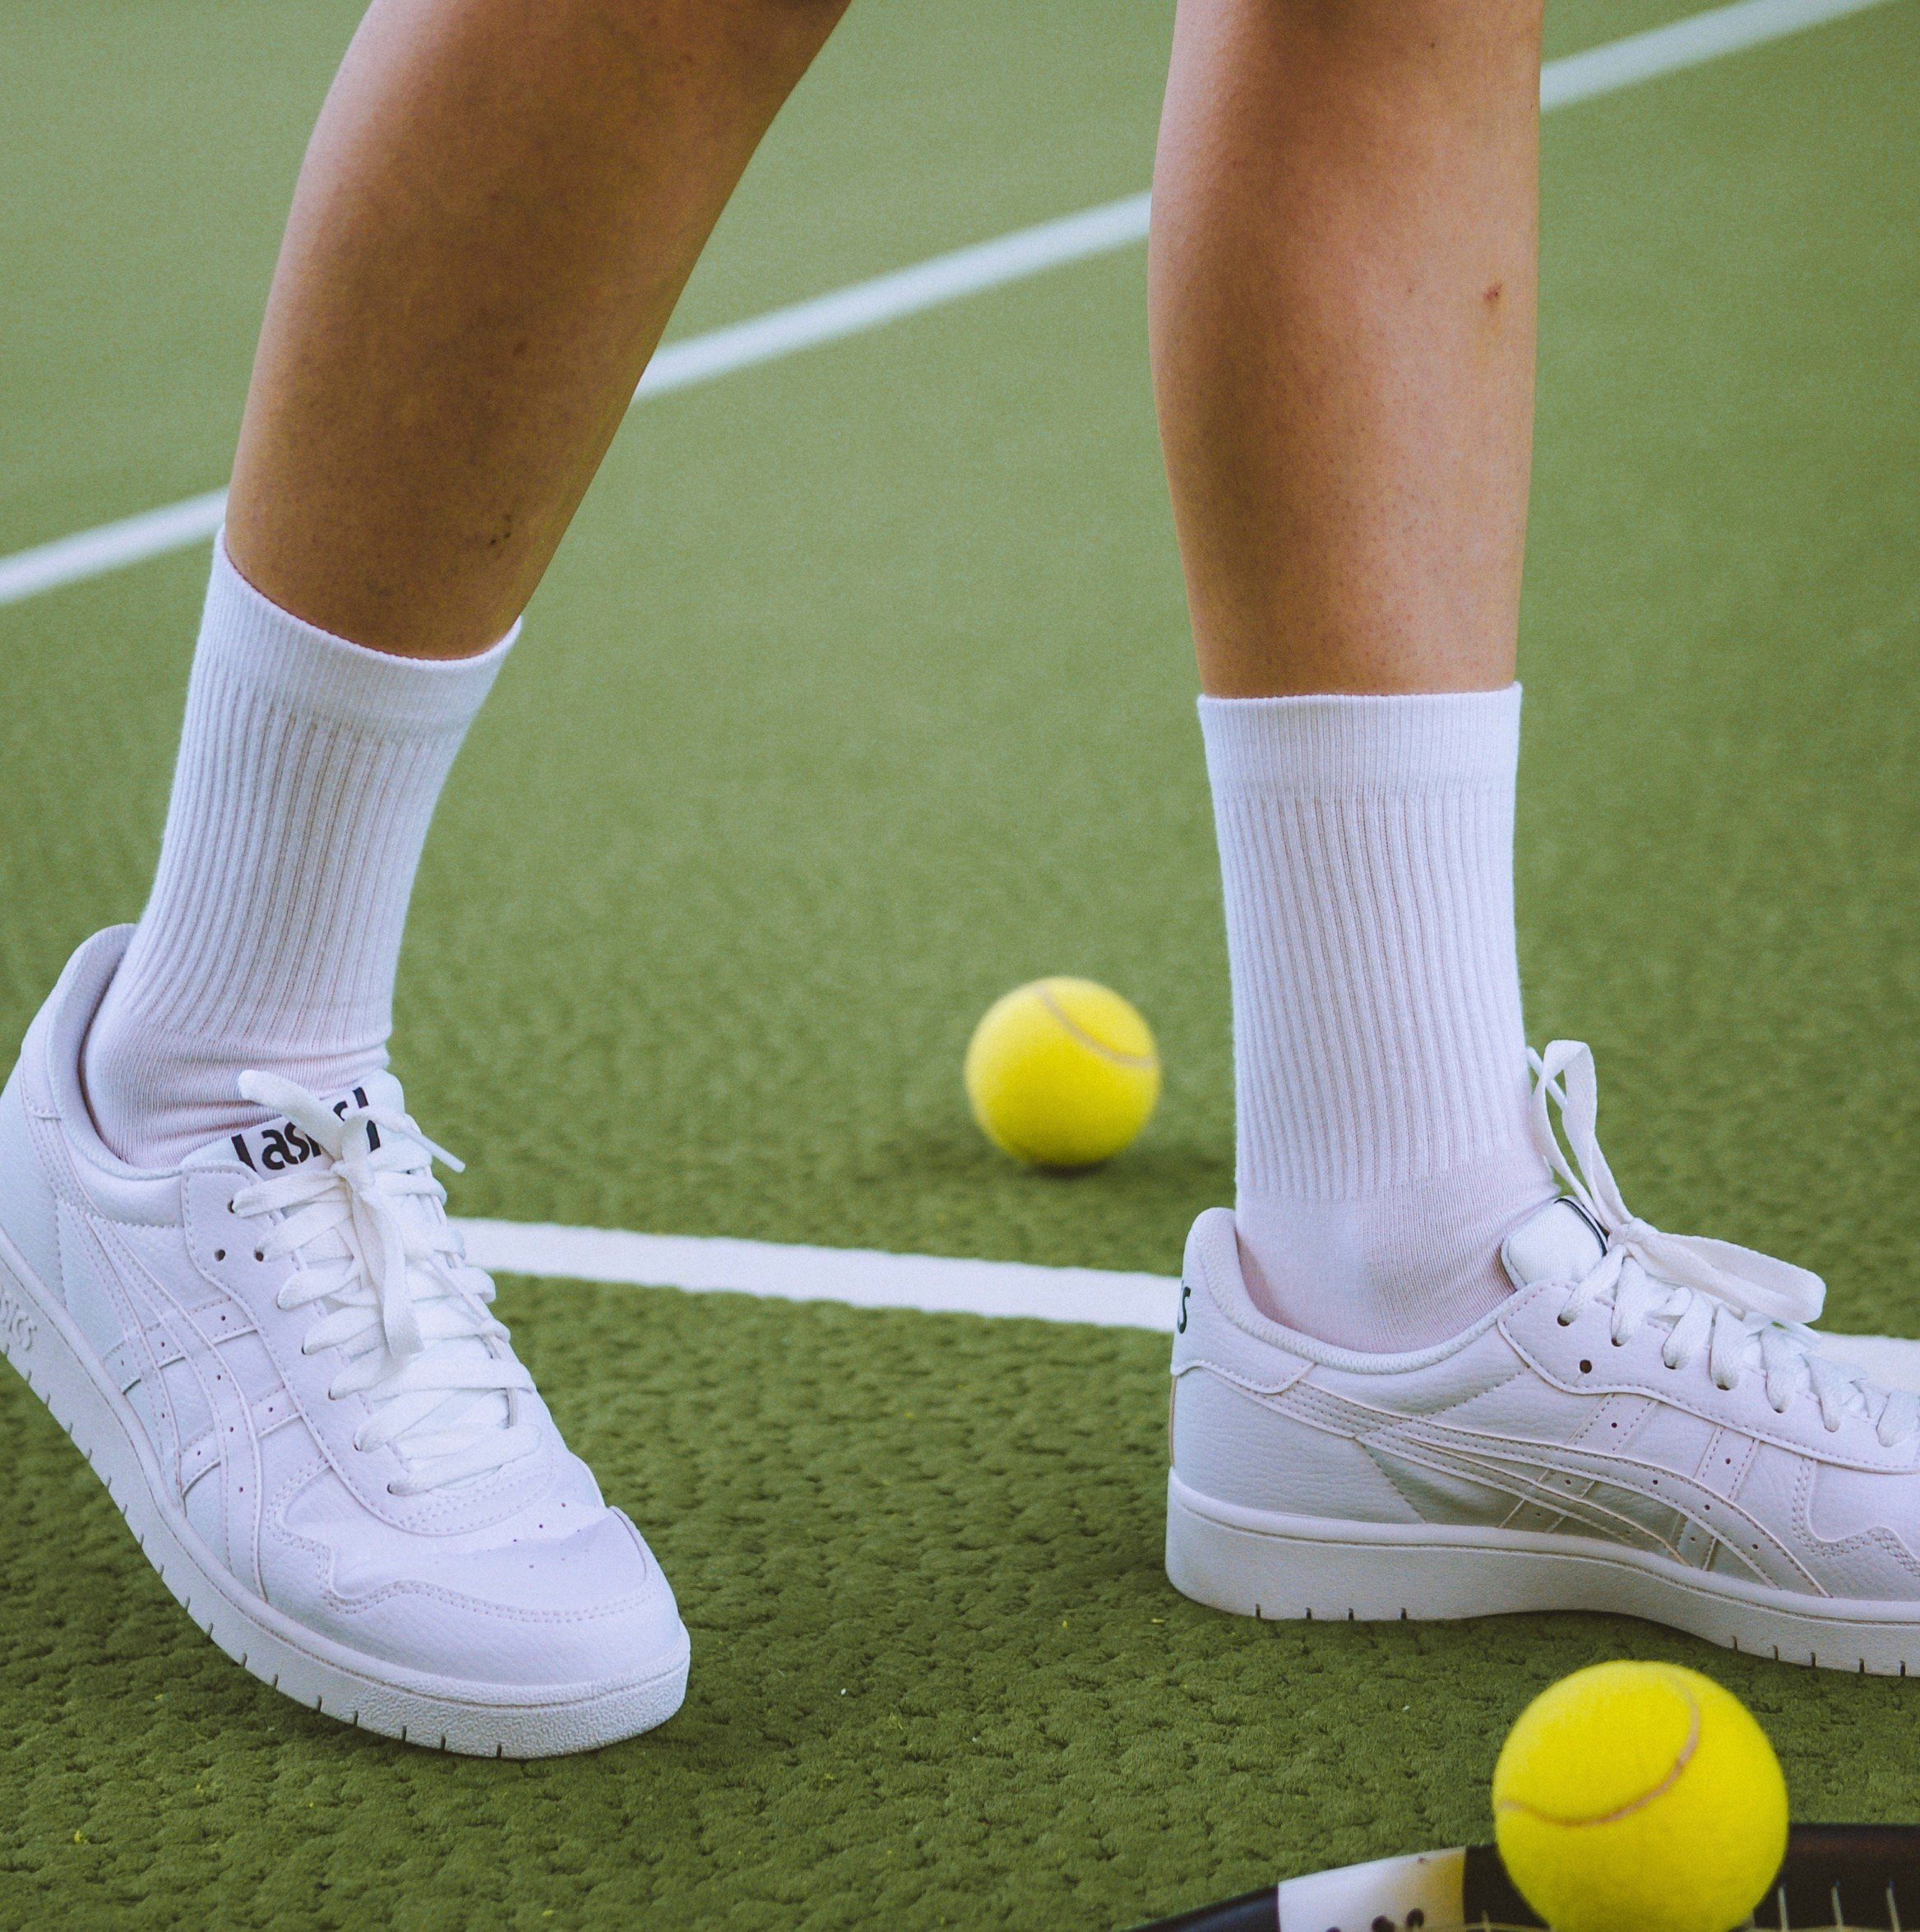 (3-Paar) Herren Socks, Tennissocken & Crew Basic Hohe EU ROOXS Made Weiß für in Sportsocken Damen 02